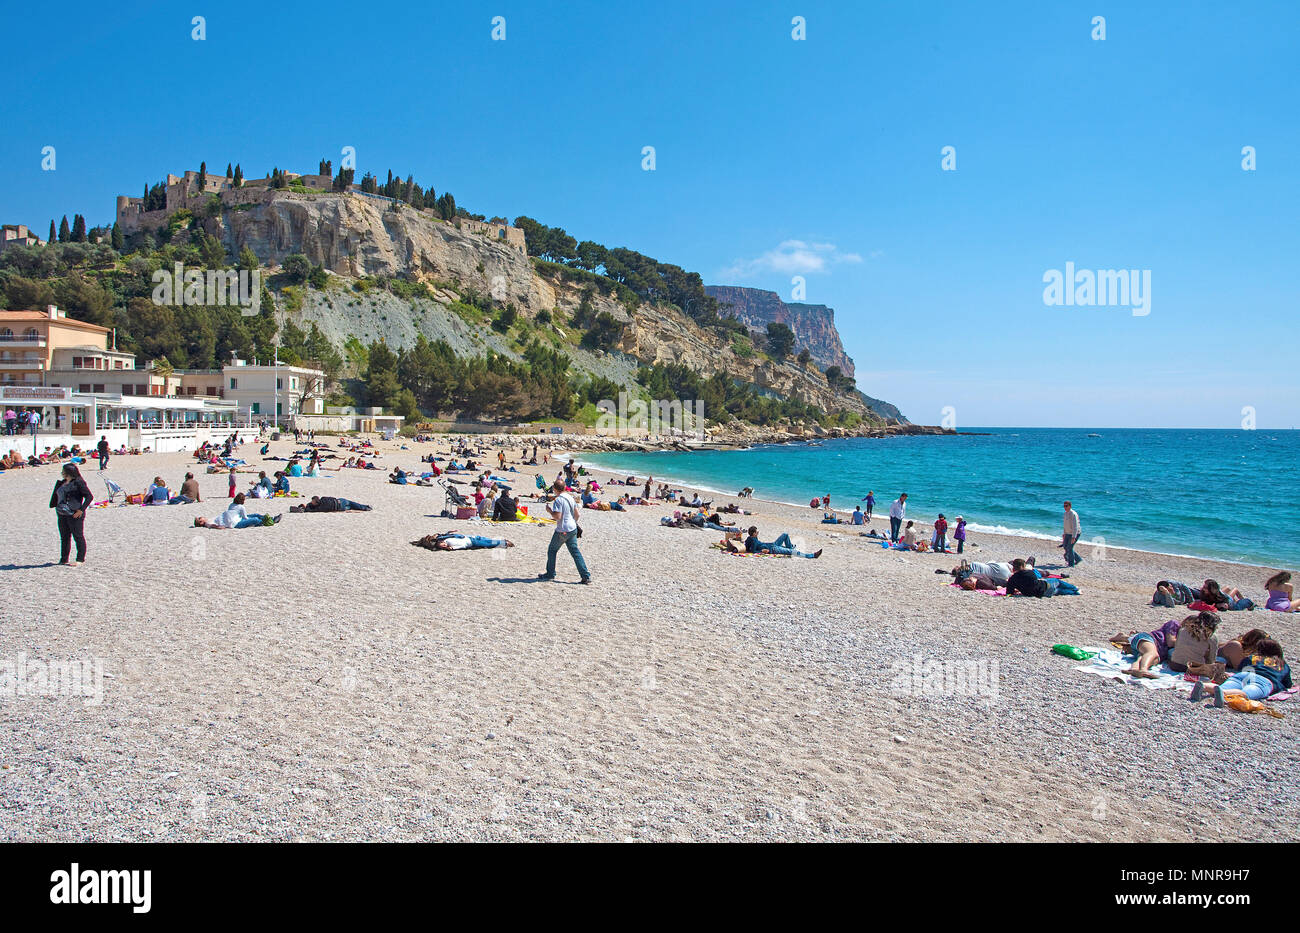 Badestrand in Cassis, Departement Bouches-du-Rhone, Provence-Alpes-Côte d’Azur, Suedfrankreich, Frankreich, Europa | Bathing beach at Cassis, Bouches- Stock Photo